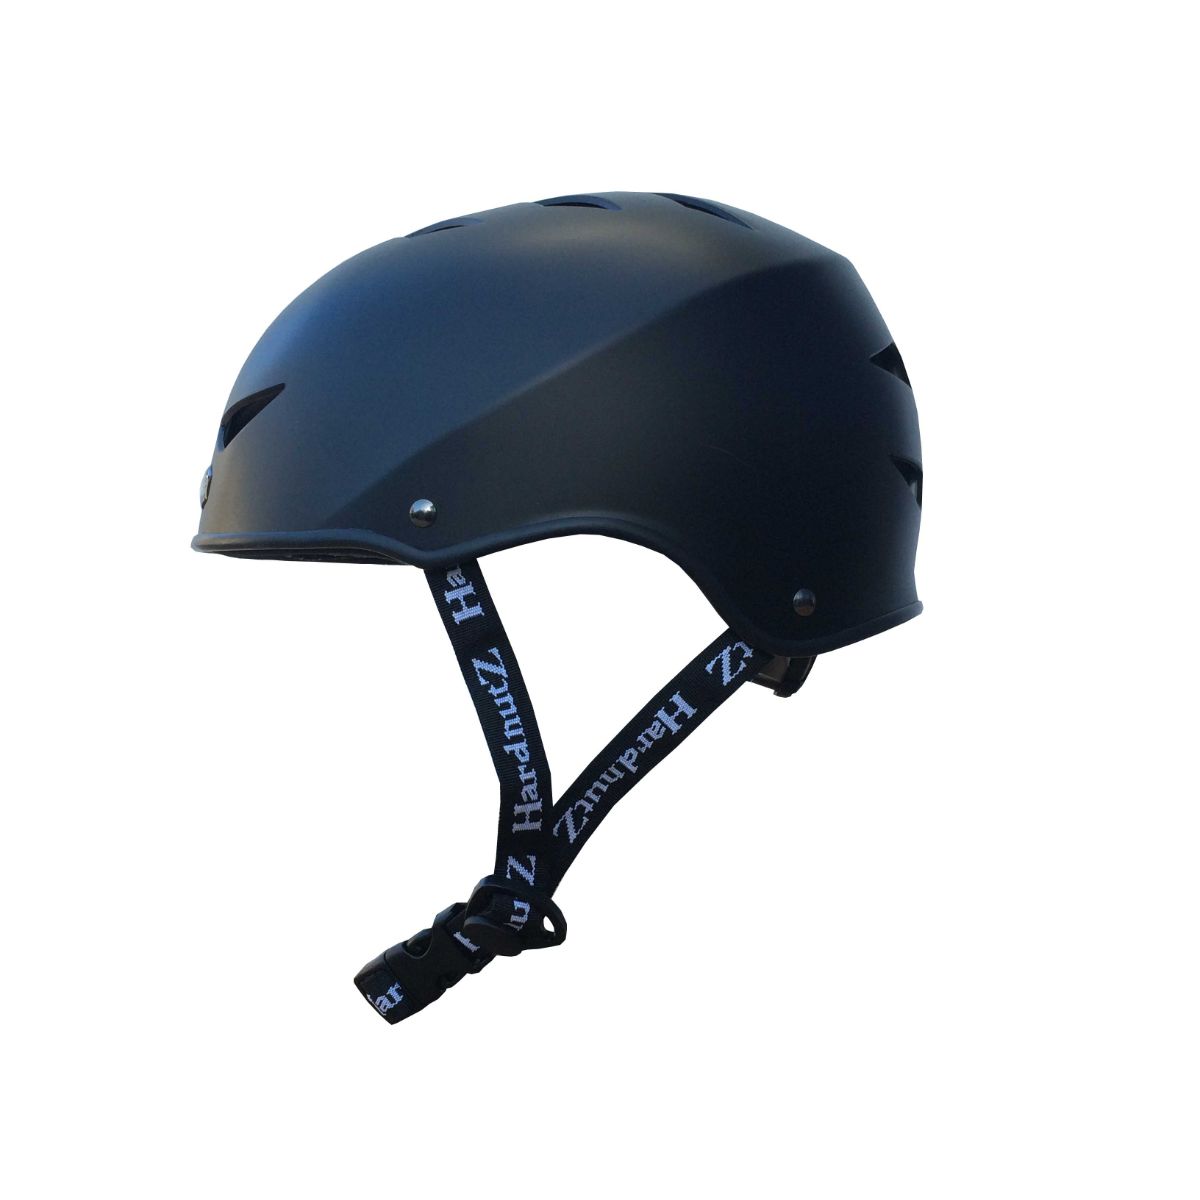 HardnutZ Street Helmet